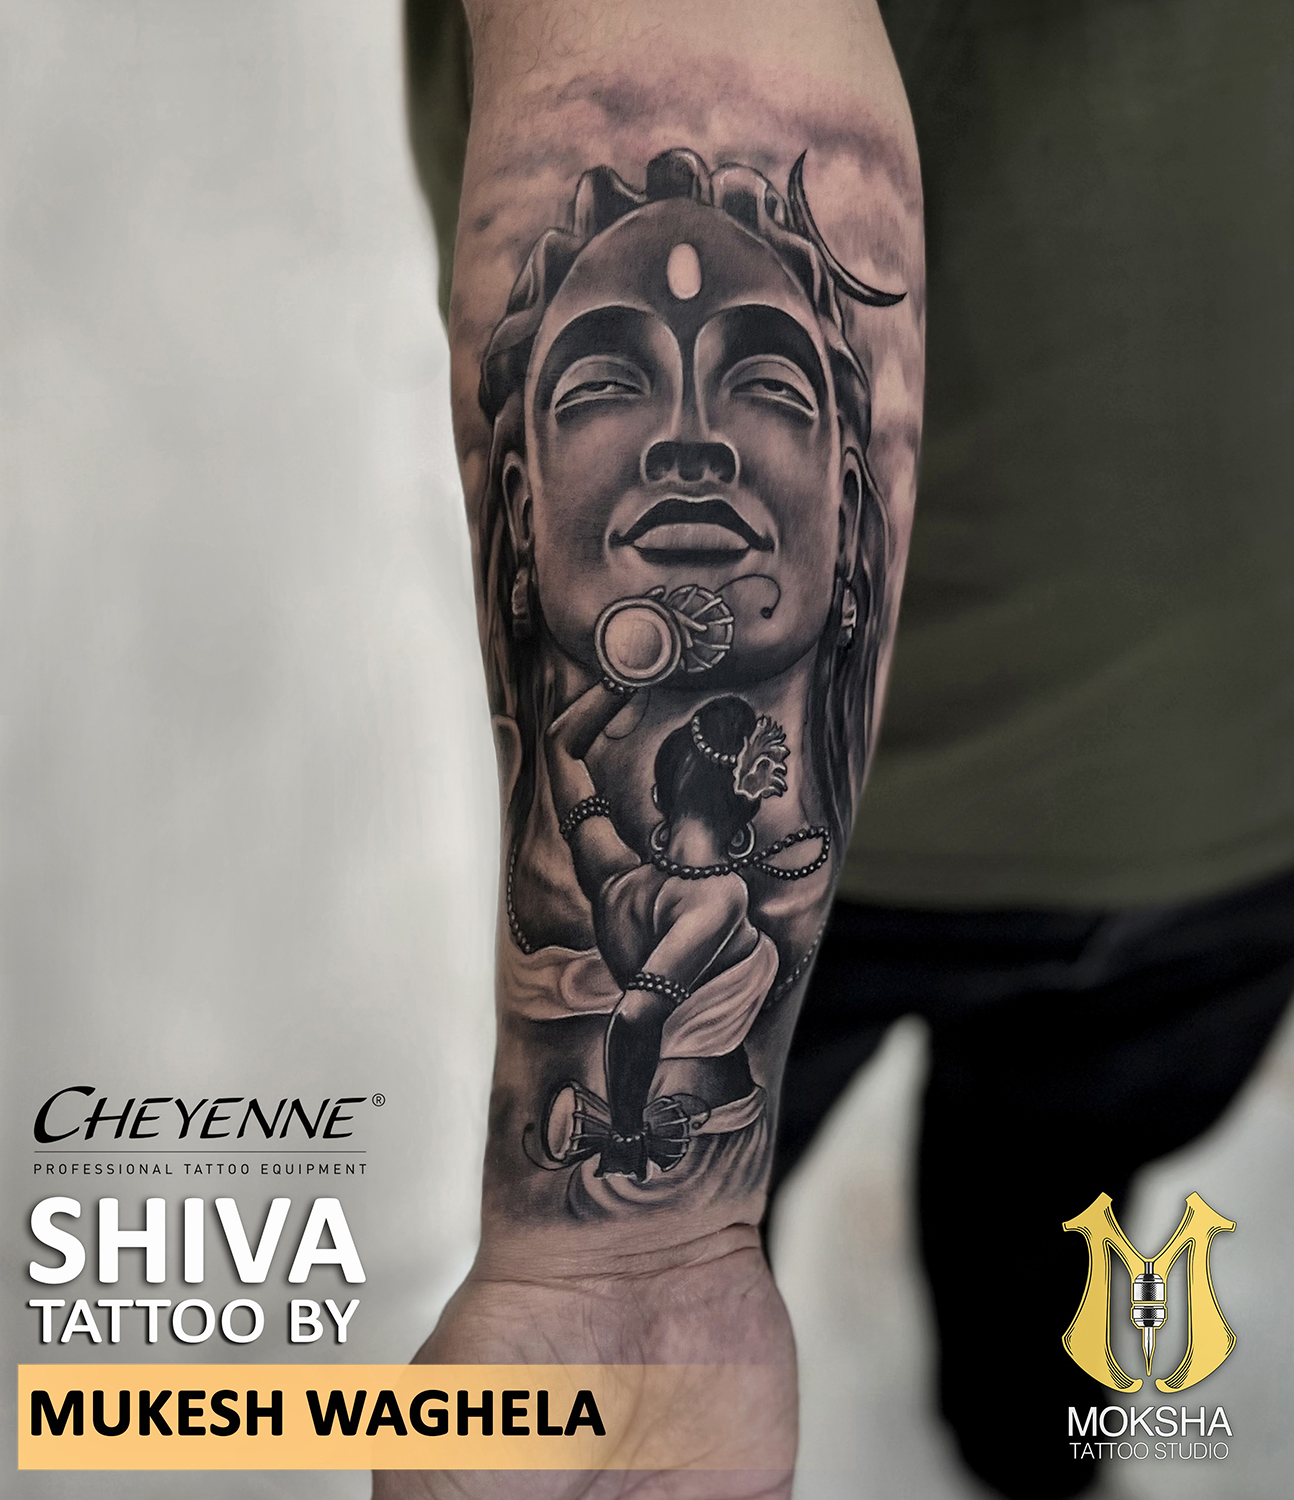 bholenath Archives - Best Tattoo Studio Goa, Safe, Hygienic - Moksha Tattoo